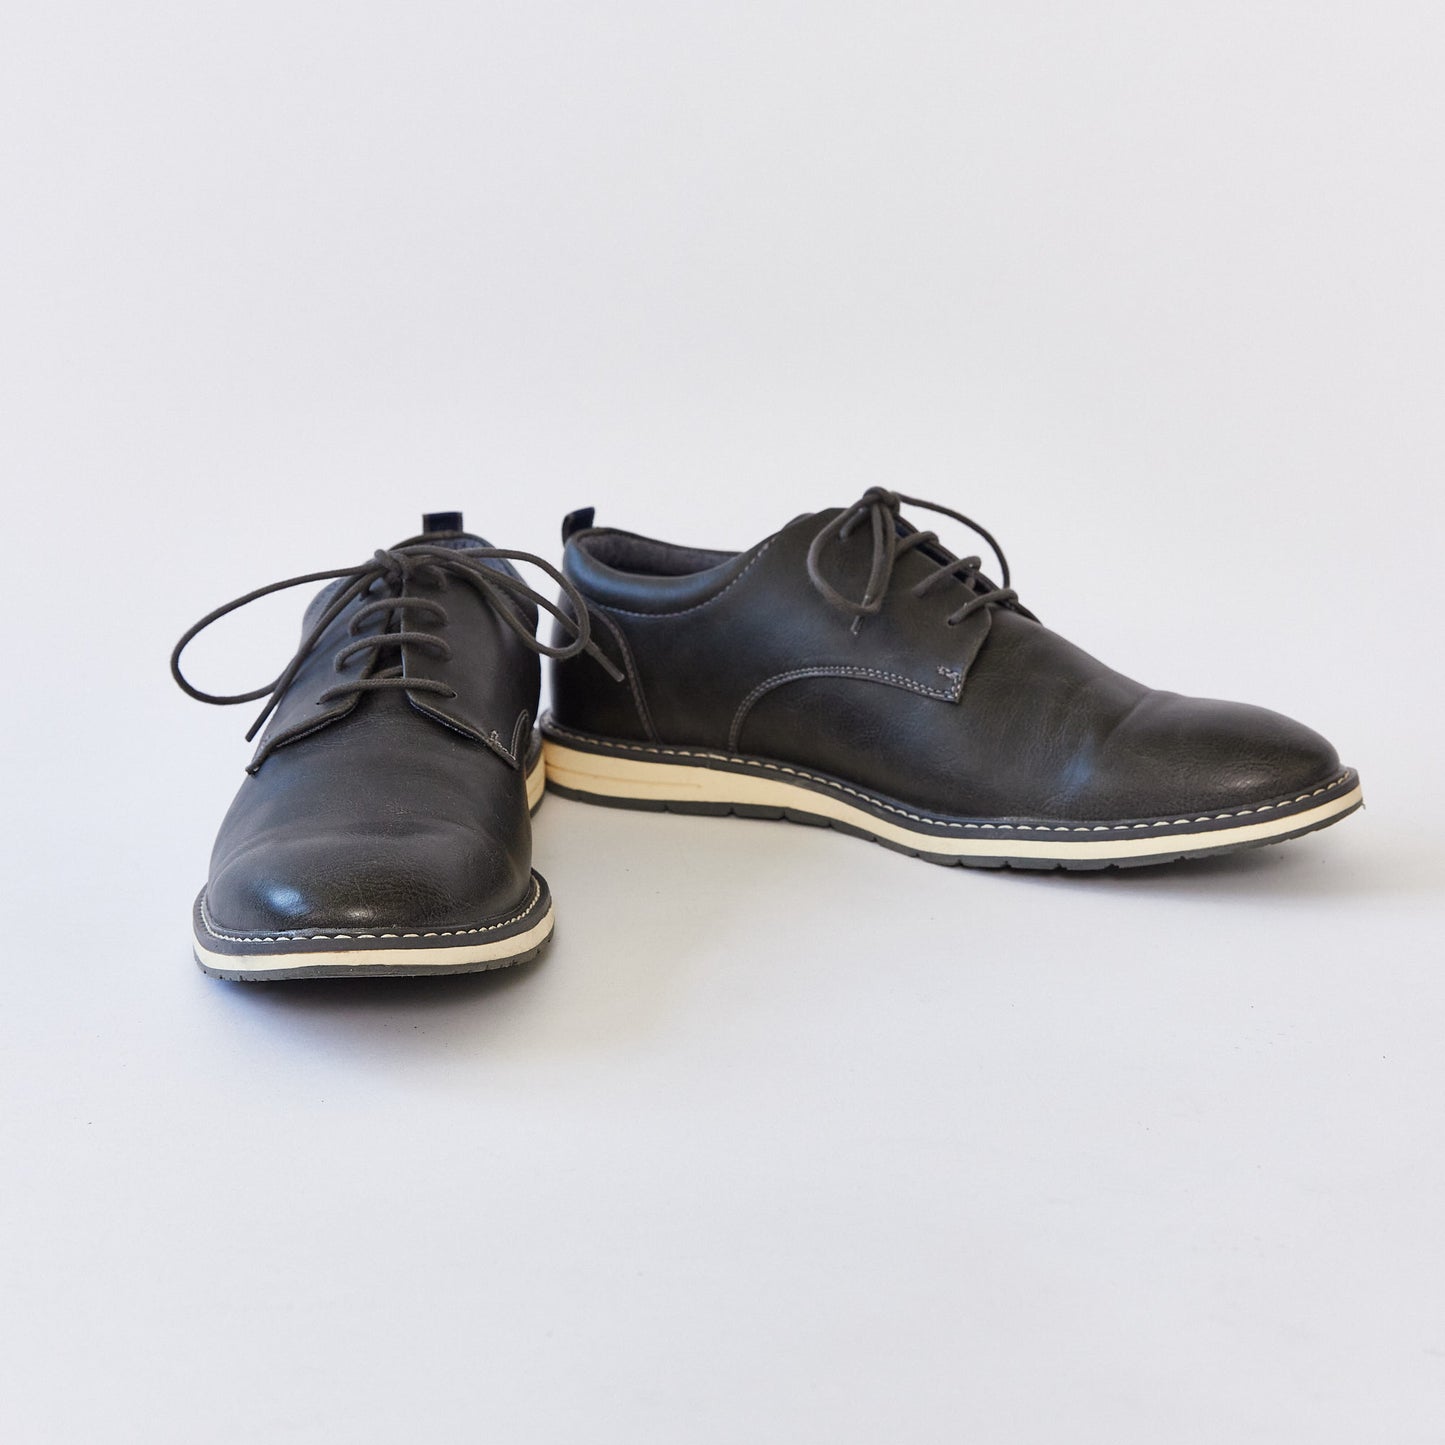 Grey Derby style shoe size 11